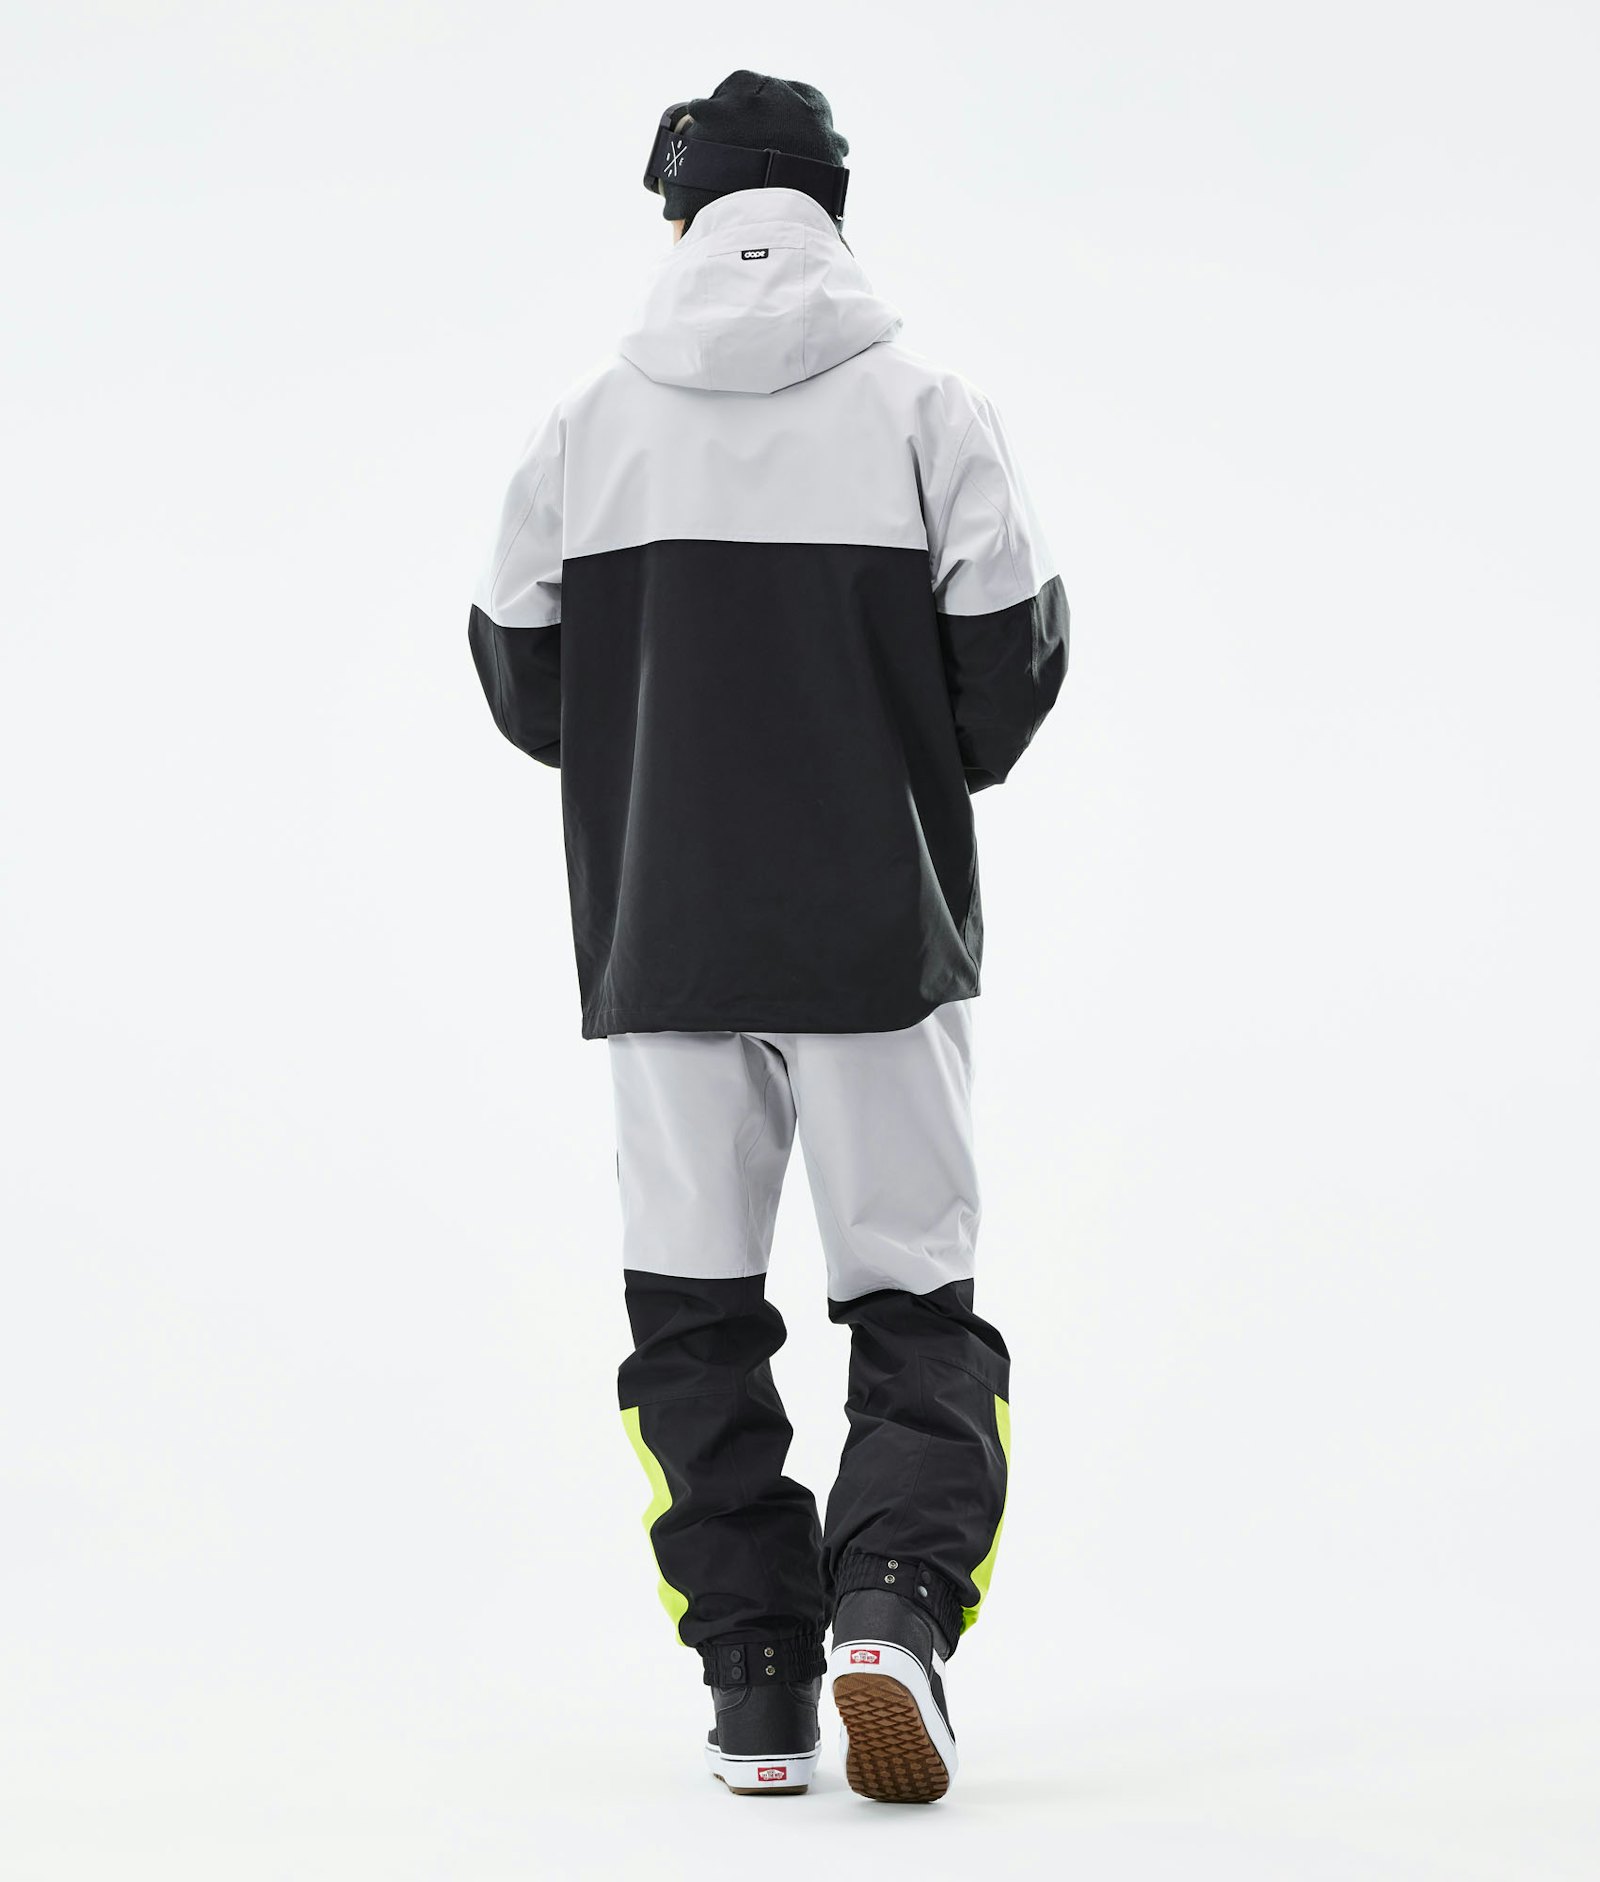 Blizzard LE Snowboard Jacket Men Limited Edition Multicolor Light Grey